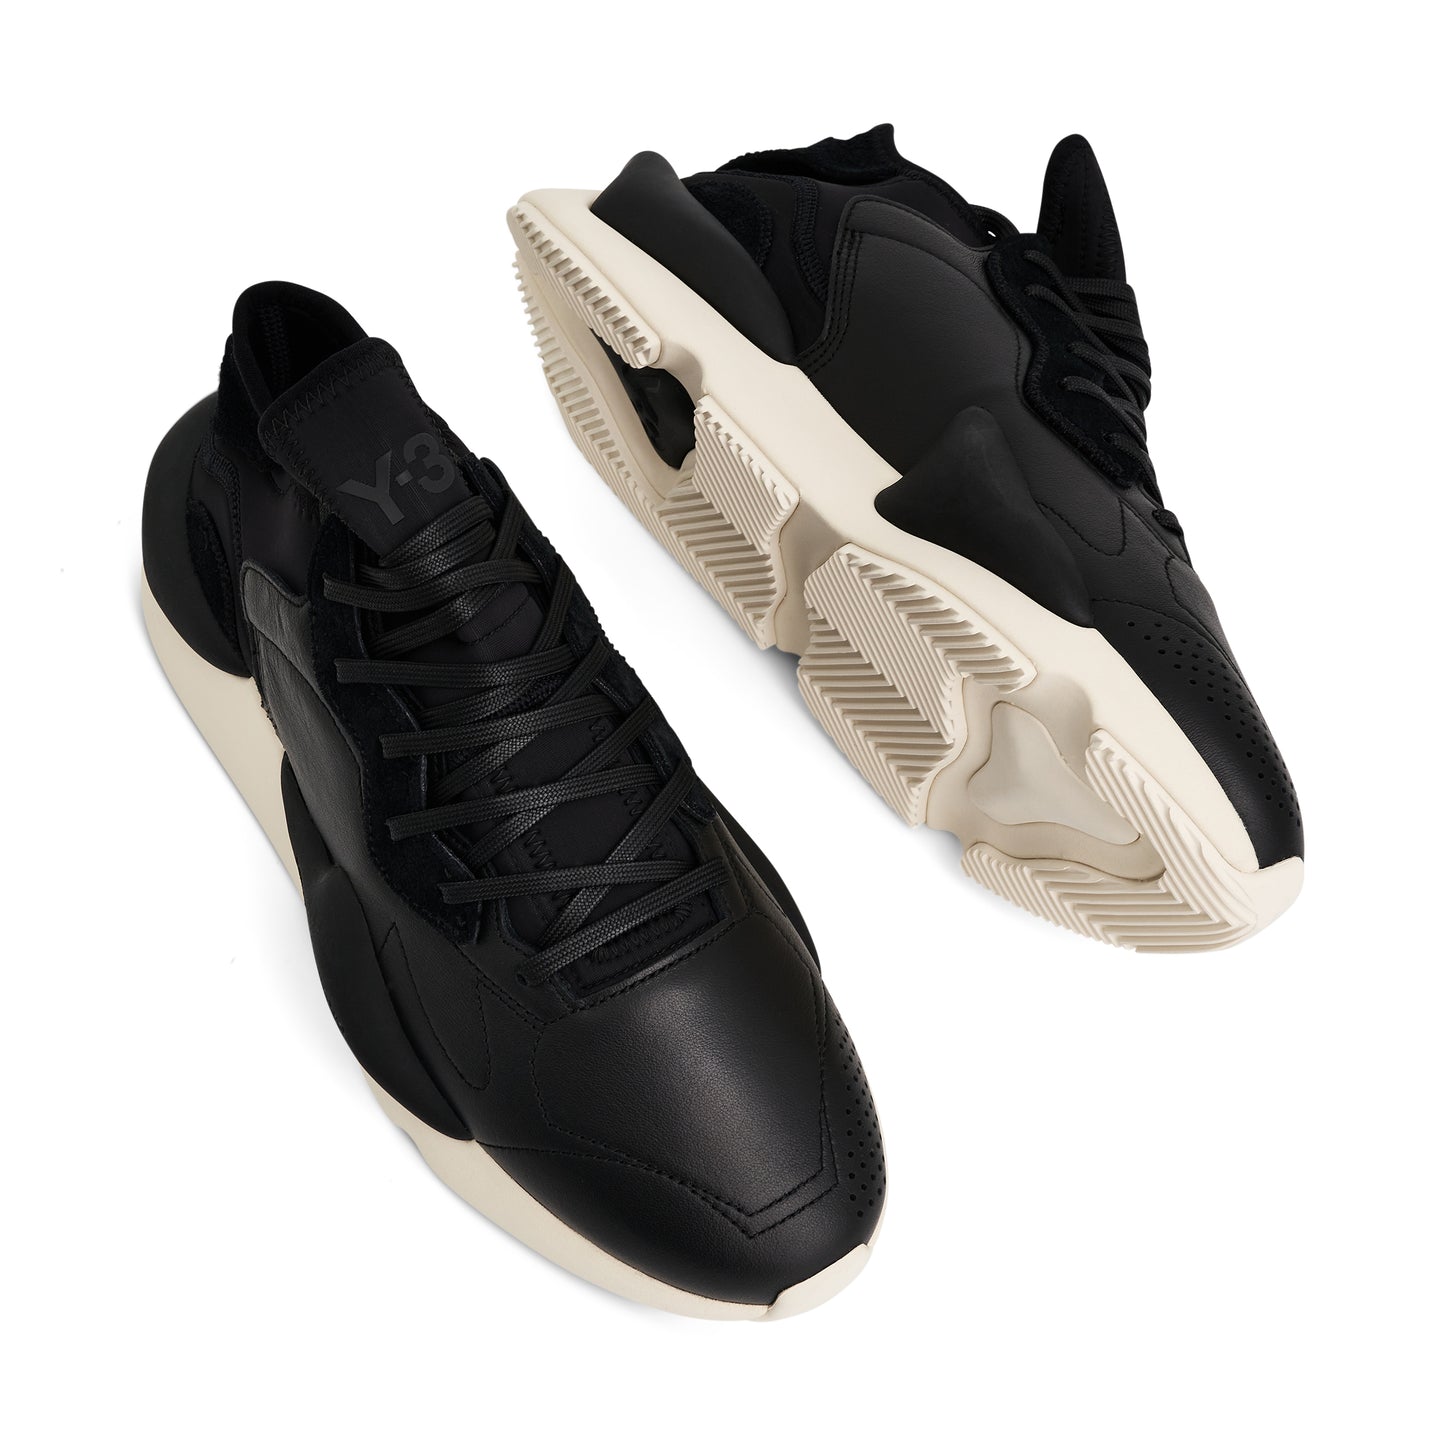 Kaiwa Sneaker in Black/Off White